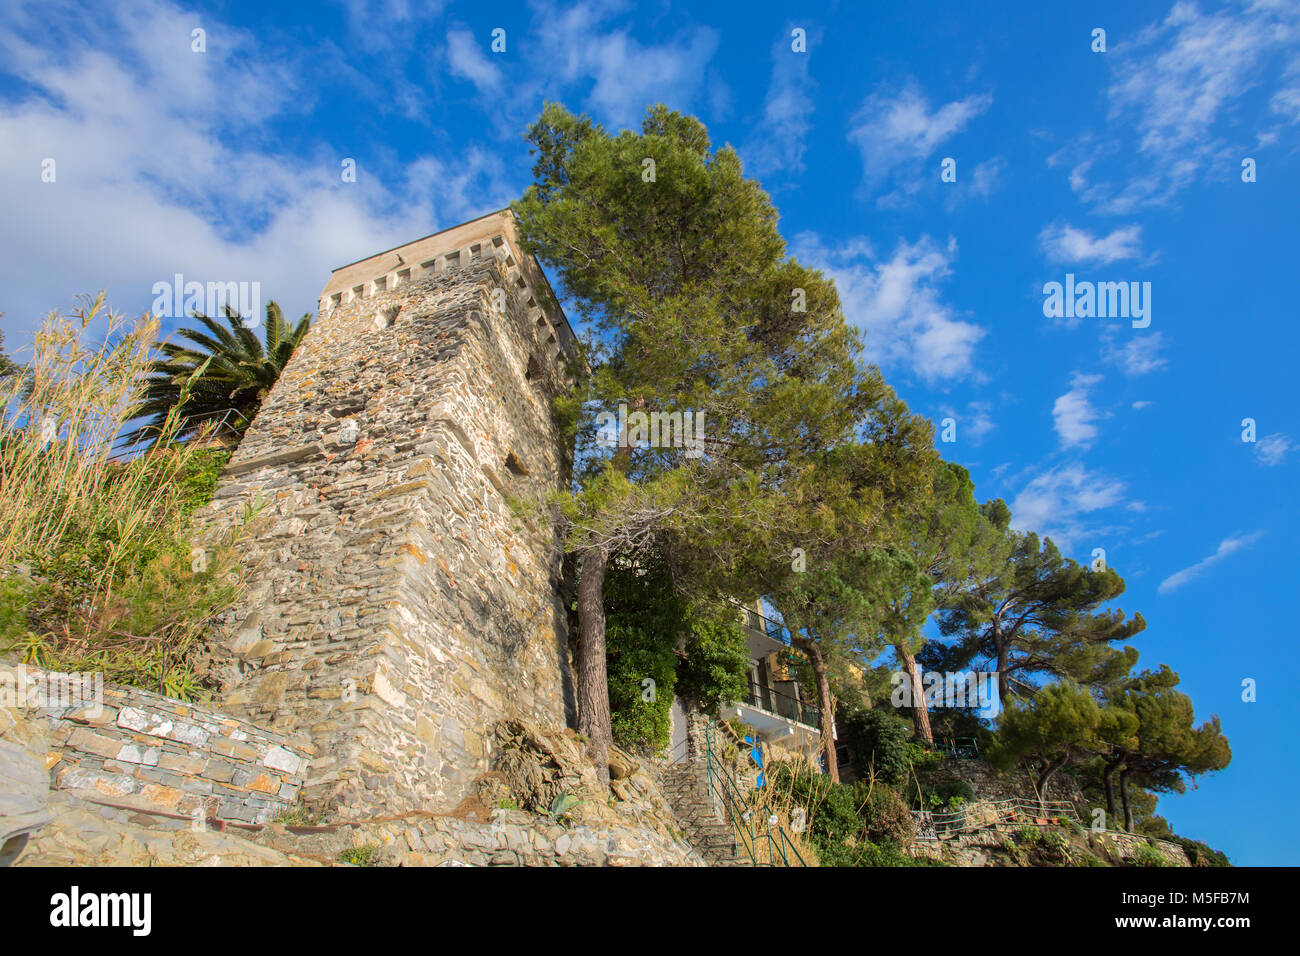 The old castle with clear blue sky at Zoagli, Genoa, (Genova), Italy. Stock Photo